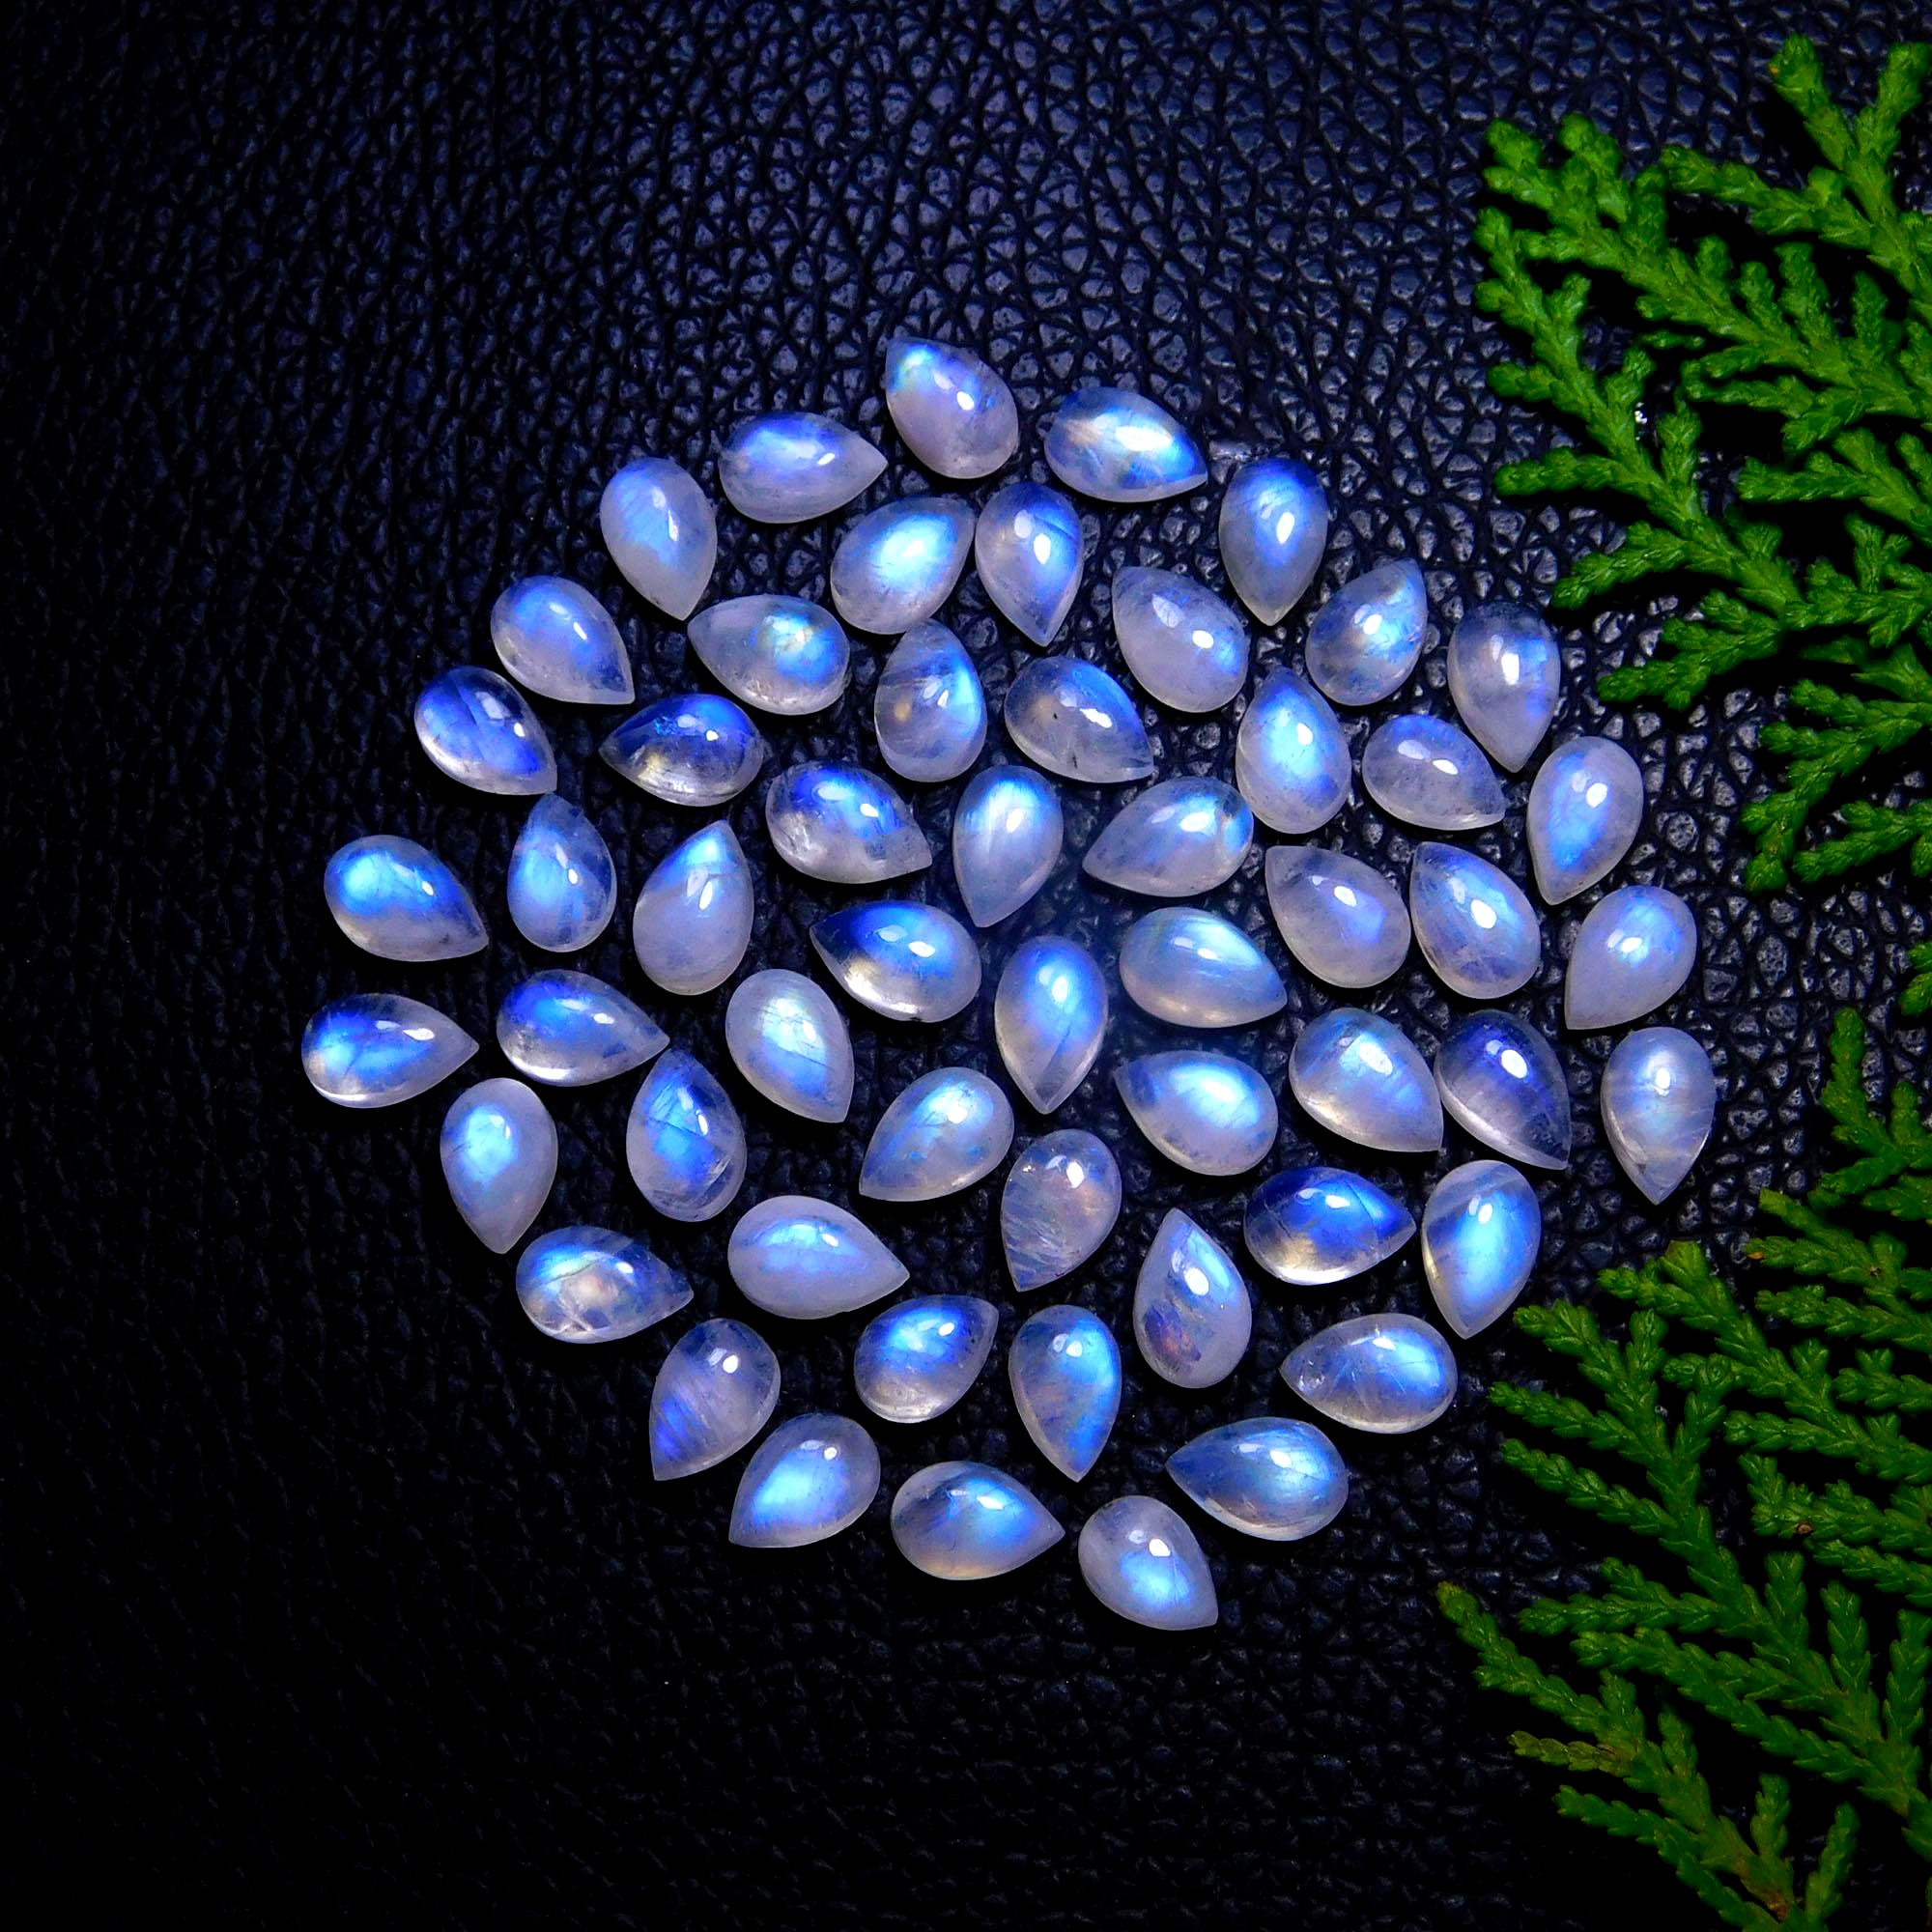 55Pcs 67Cts Natural Rainbow Moonstone Pear Shape Blue Fire Cabochon Lot Semi Precious Loose Gemstone Jewelry Supplies Crystal 8X5mm #9904